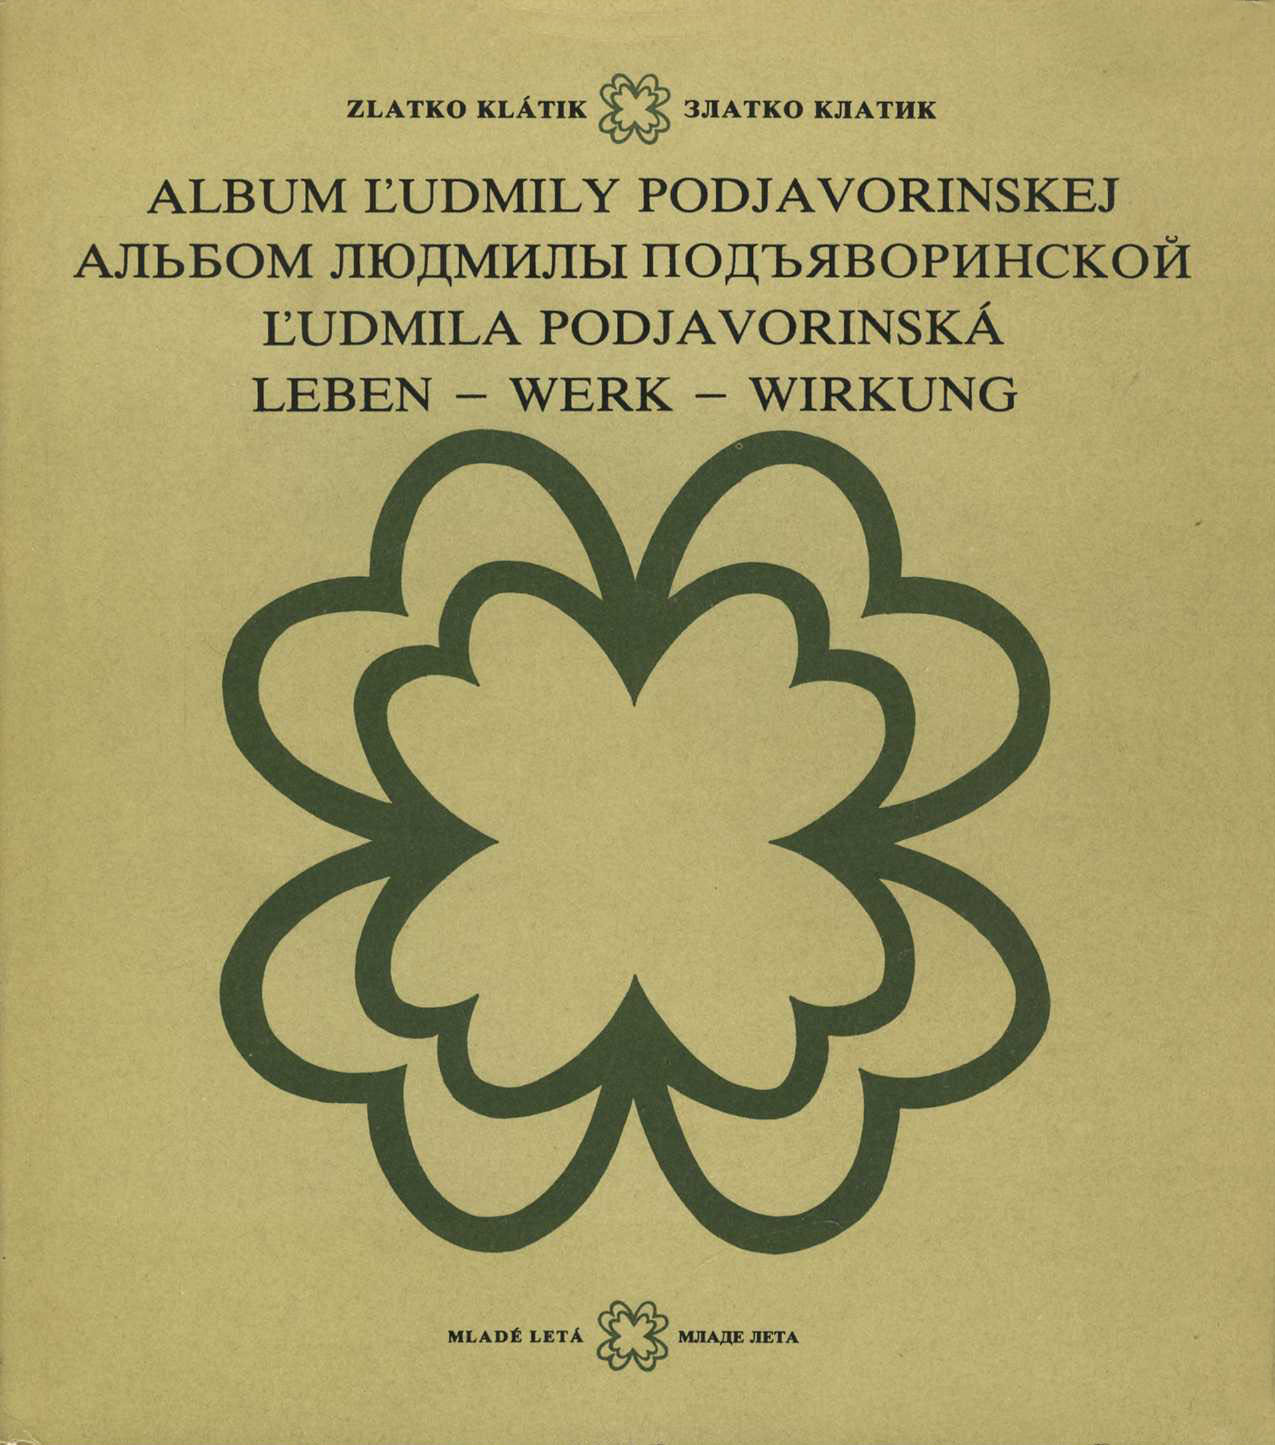 Album Ľudmily Podjavorinskej (Zlatko Klátik)